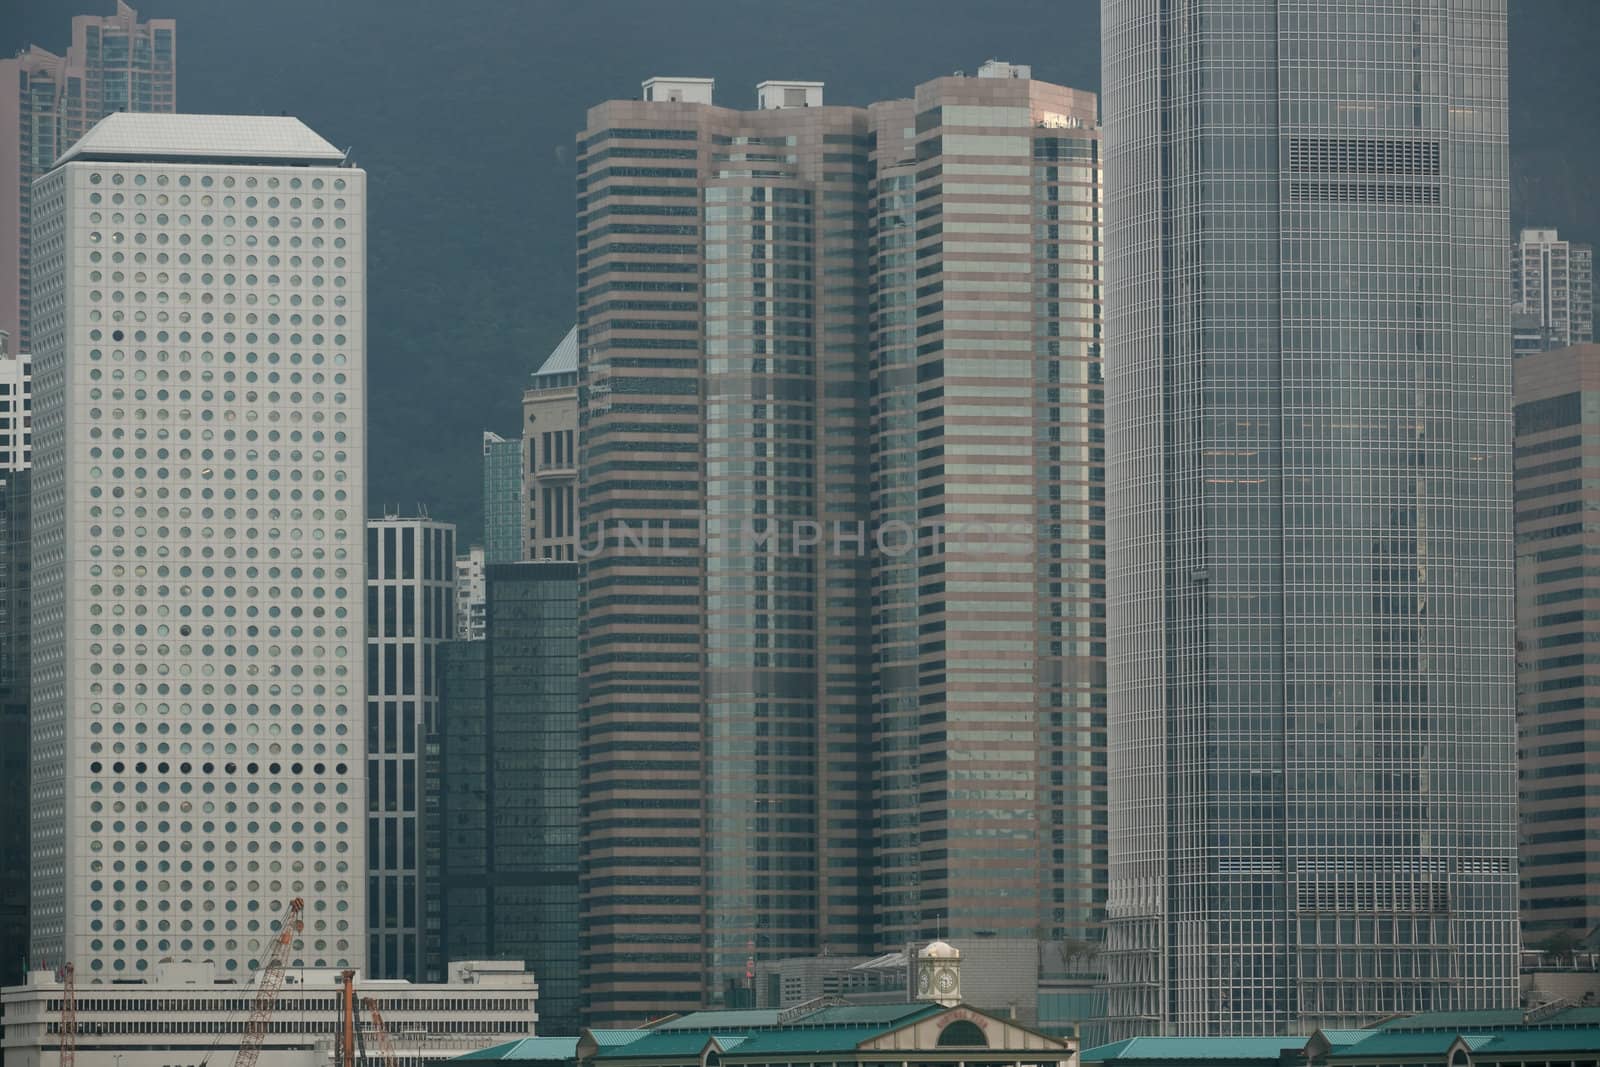 details of office buildings in Hong Kong by leungchopan